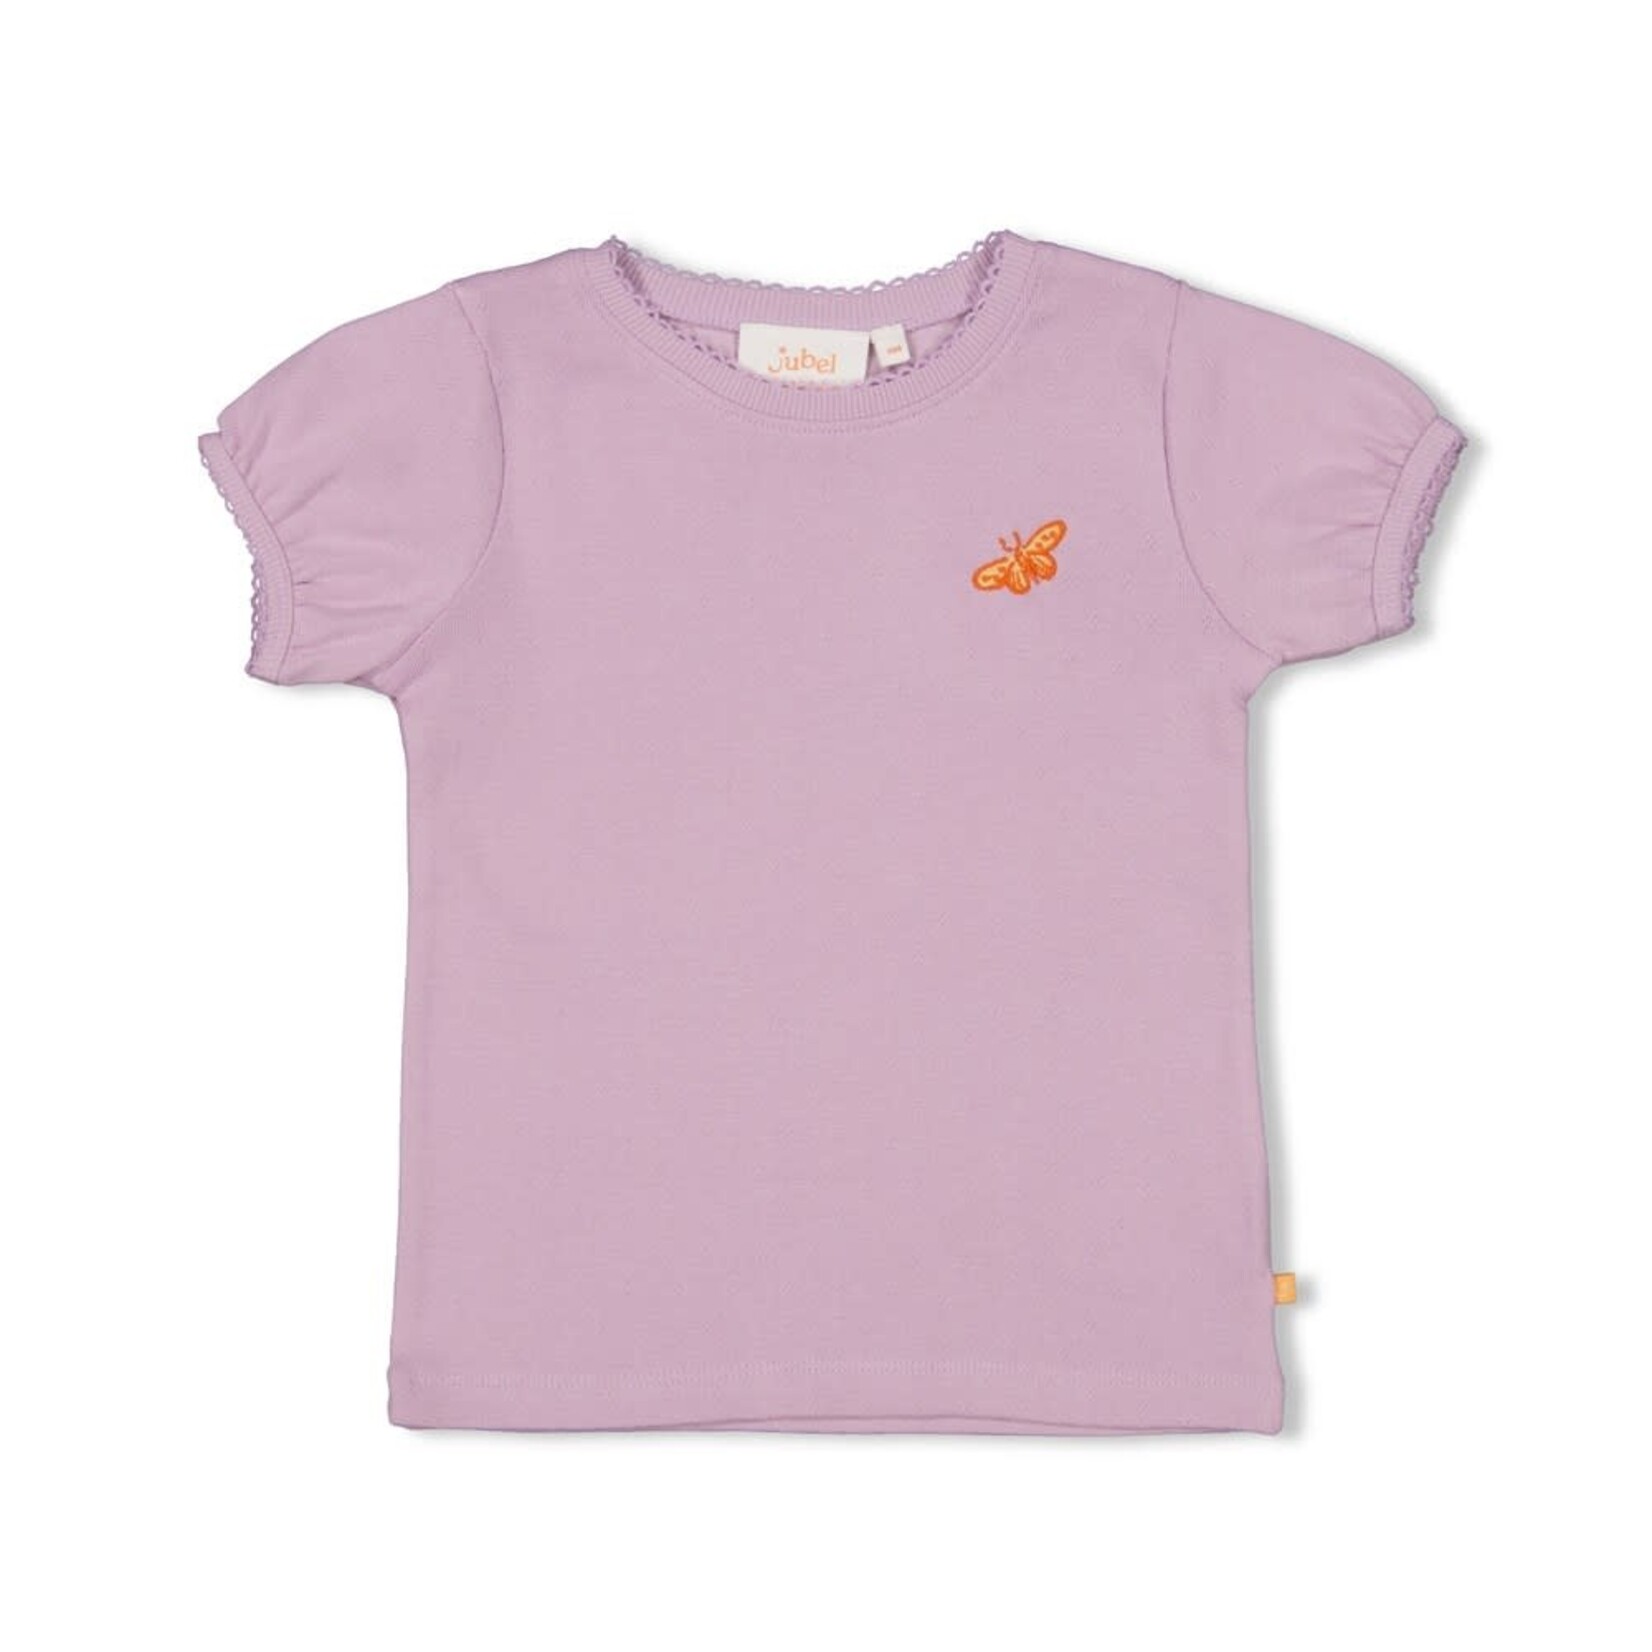 Jubel T-shirt - Sunny Side Up lila